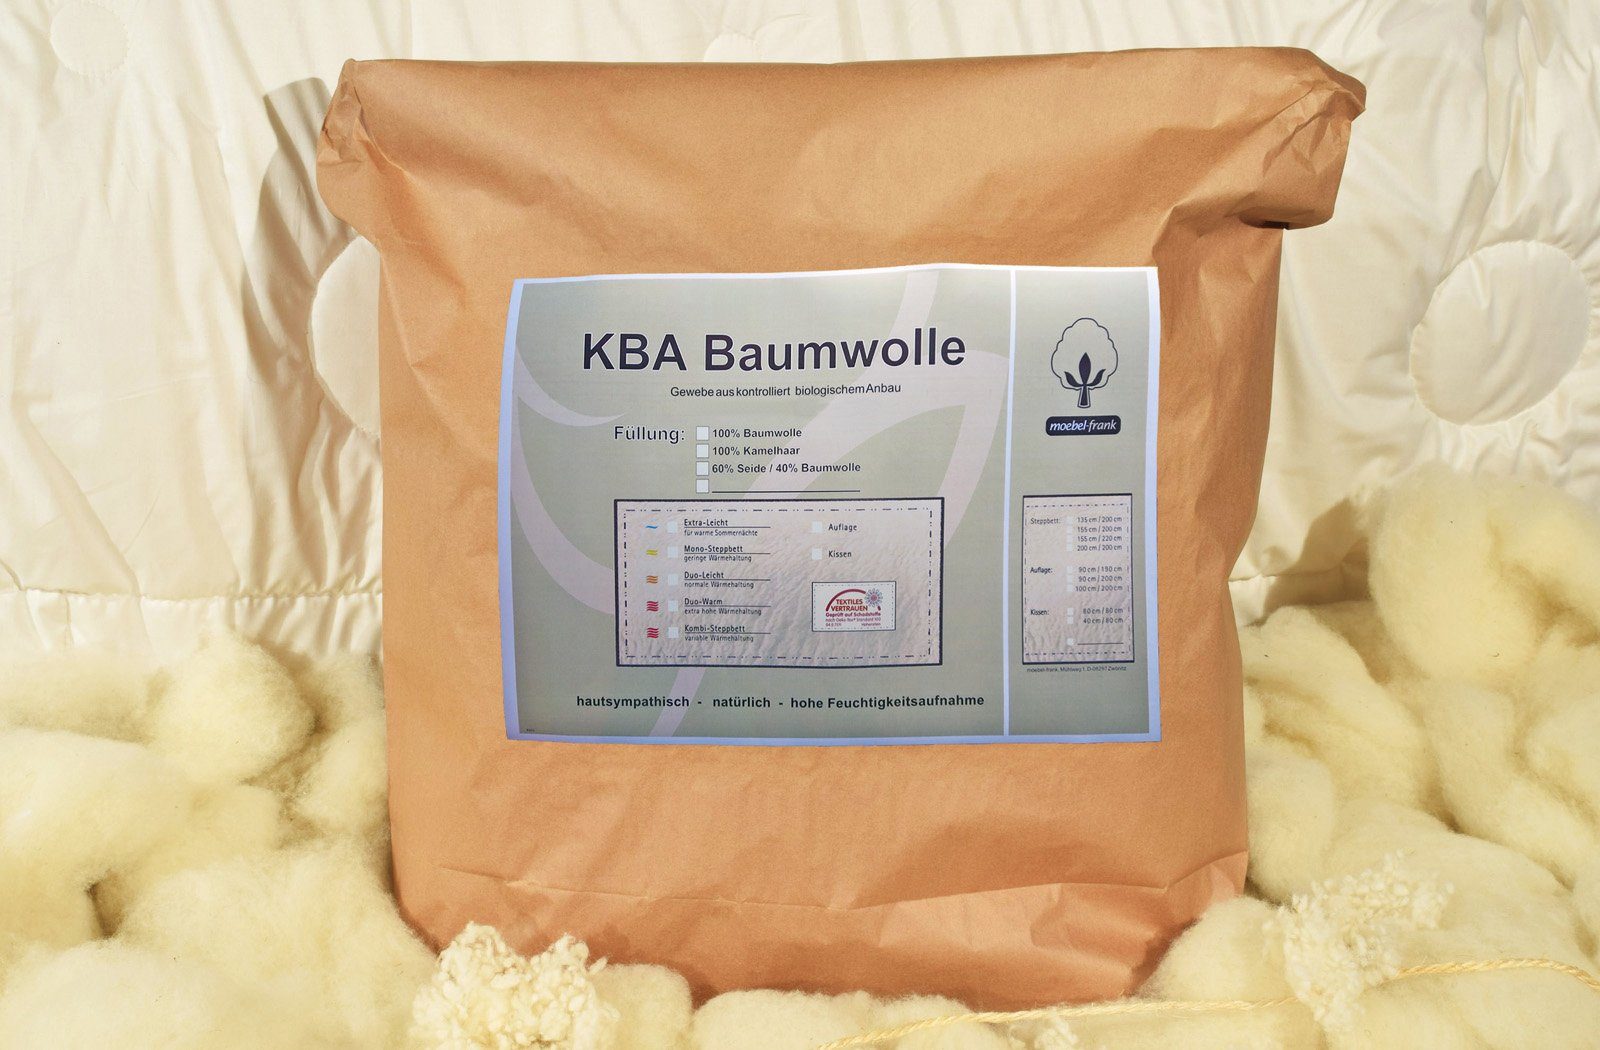 Baumwollbettdecke, Nancy, franknatur, Füllung: 100% Baumwolle kbA, 100% kbA, Baumwolle Sommer-Bettdecke leichte Bezug